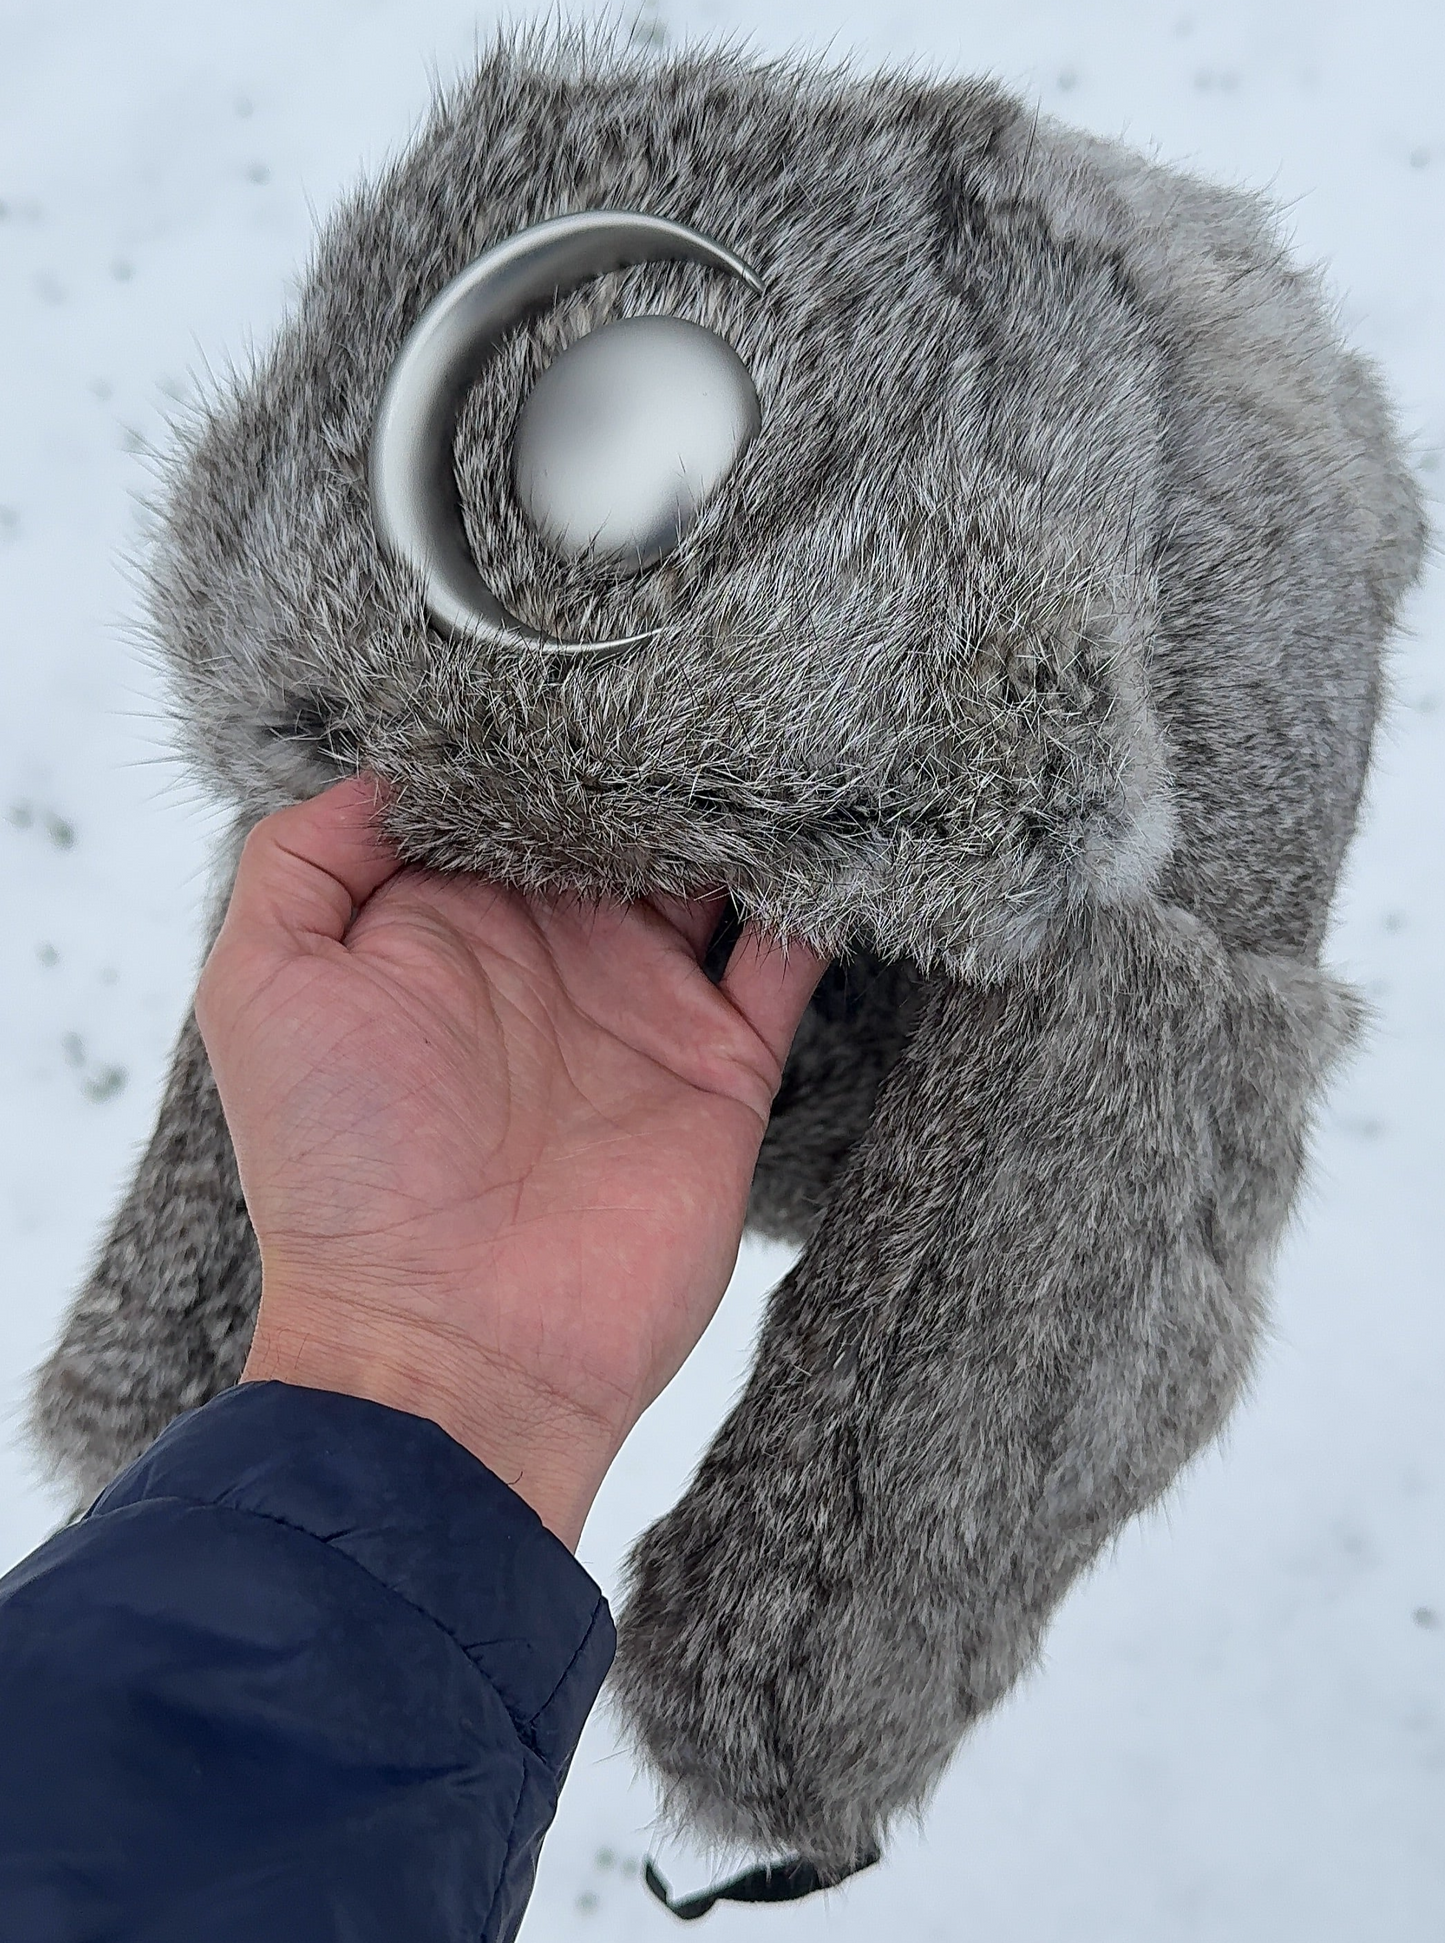 Chthonic Frosted Emblem Premium 100% Rabbit Fur Ash Grey Trapper Hat